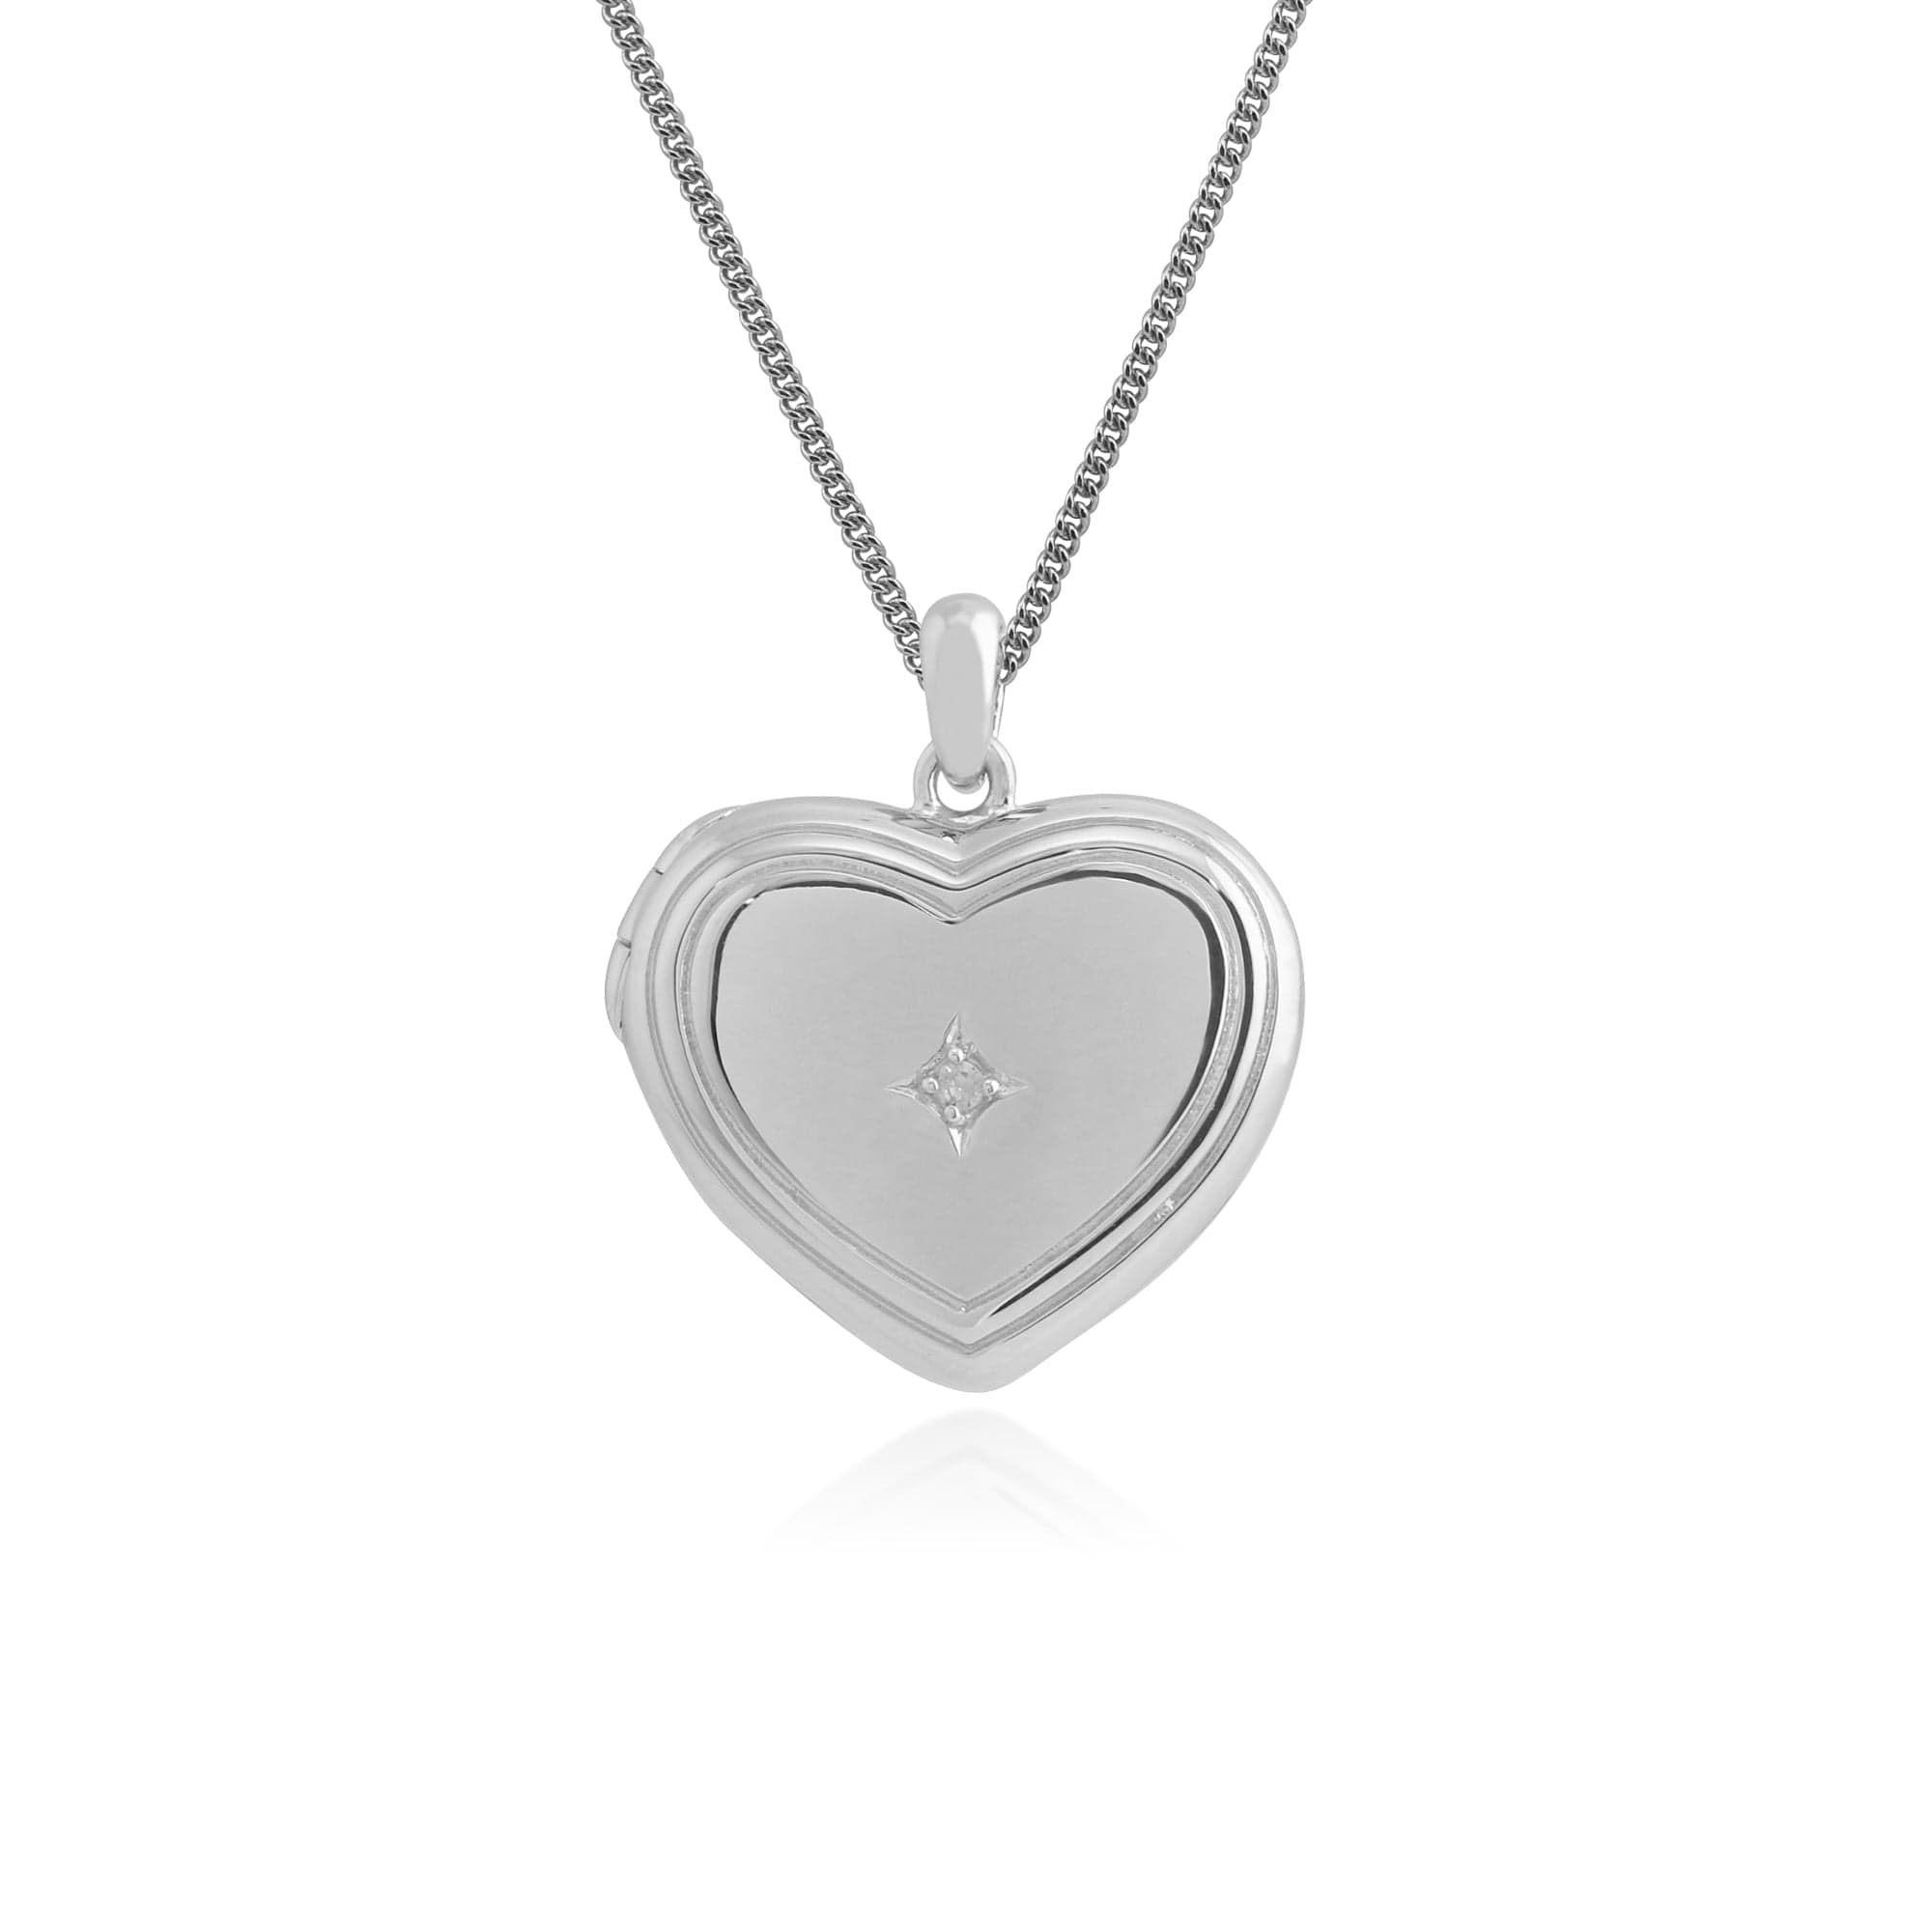 Gemondo 925 Sterling Silver 1pt Diamond Heart Locket Pendant on 45cm Chain Image